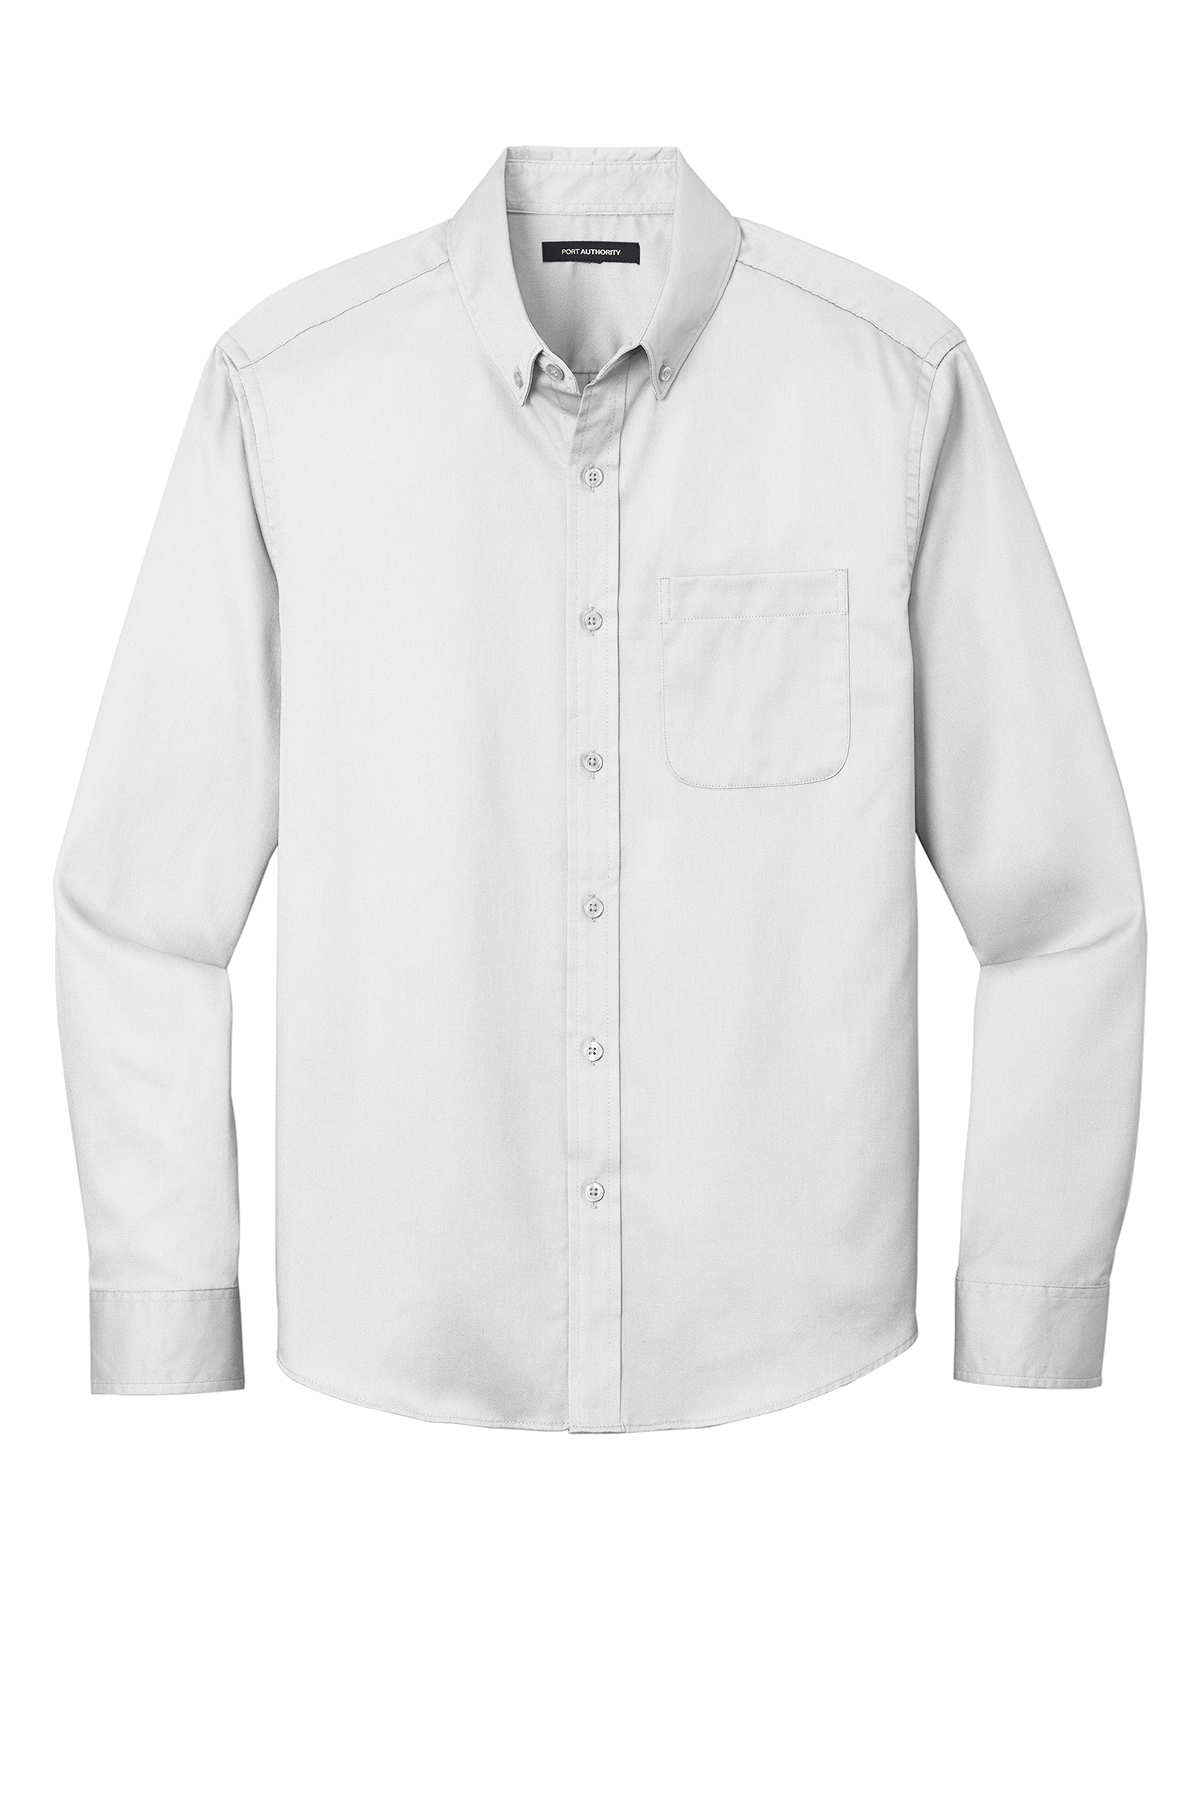 Port Authority Long Sleeve SuperPro React Twill Shirt | Product | Port ...